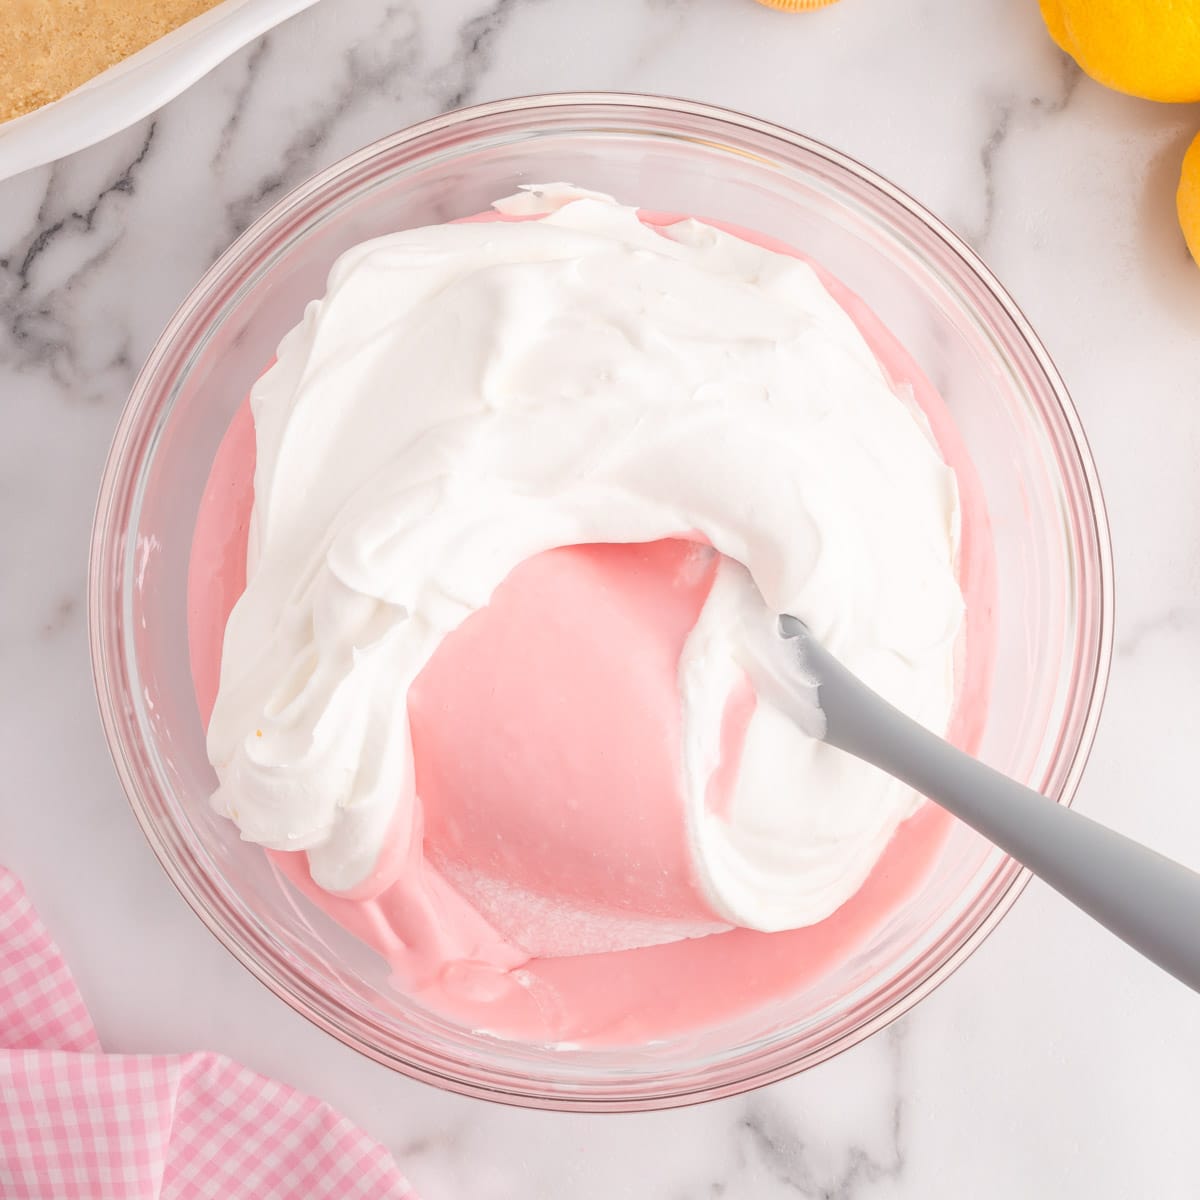 folding whipped cream into pink lemonade cheesecake batter